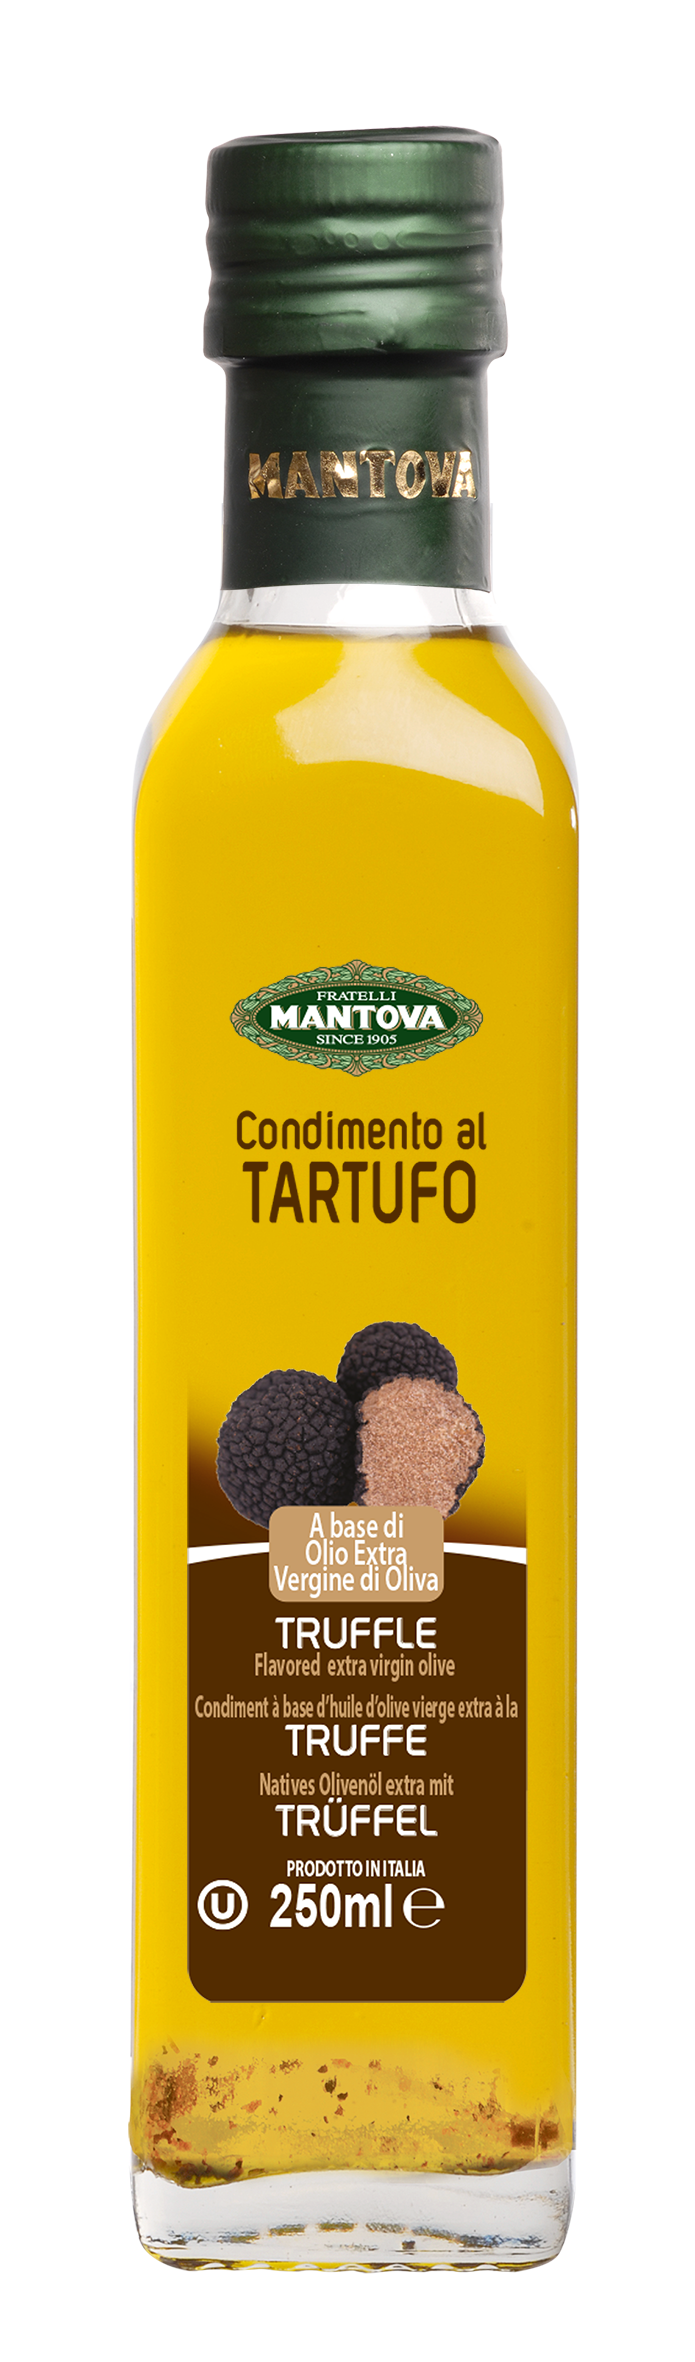 Black Truffle Flavored Extra Virgin Olive Oil Mantova 250ml